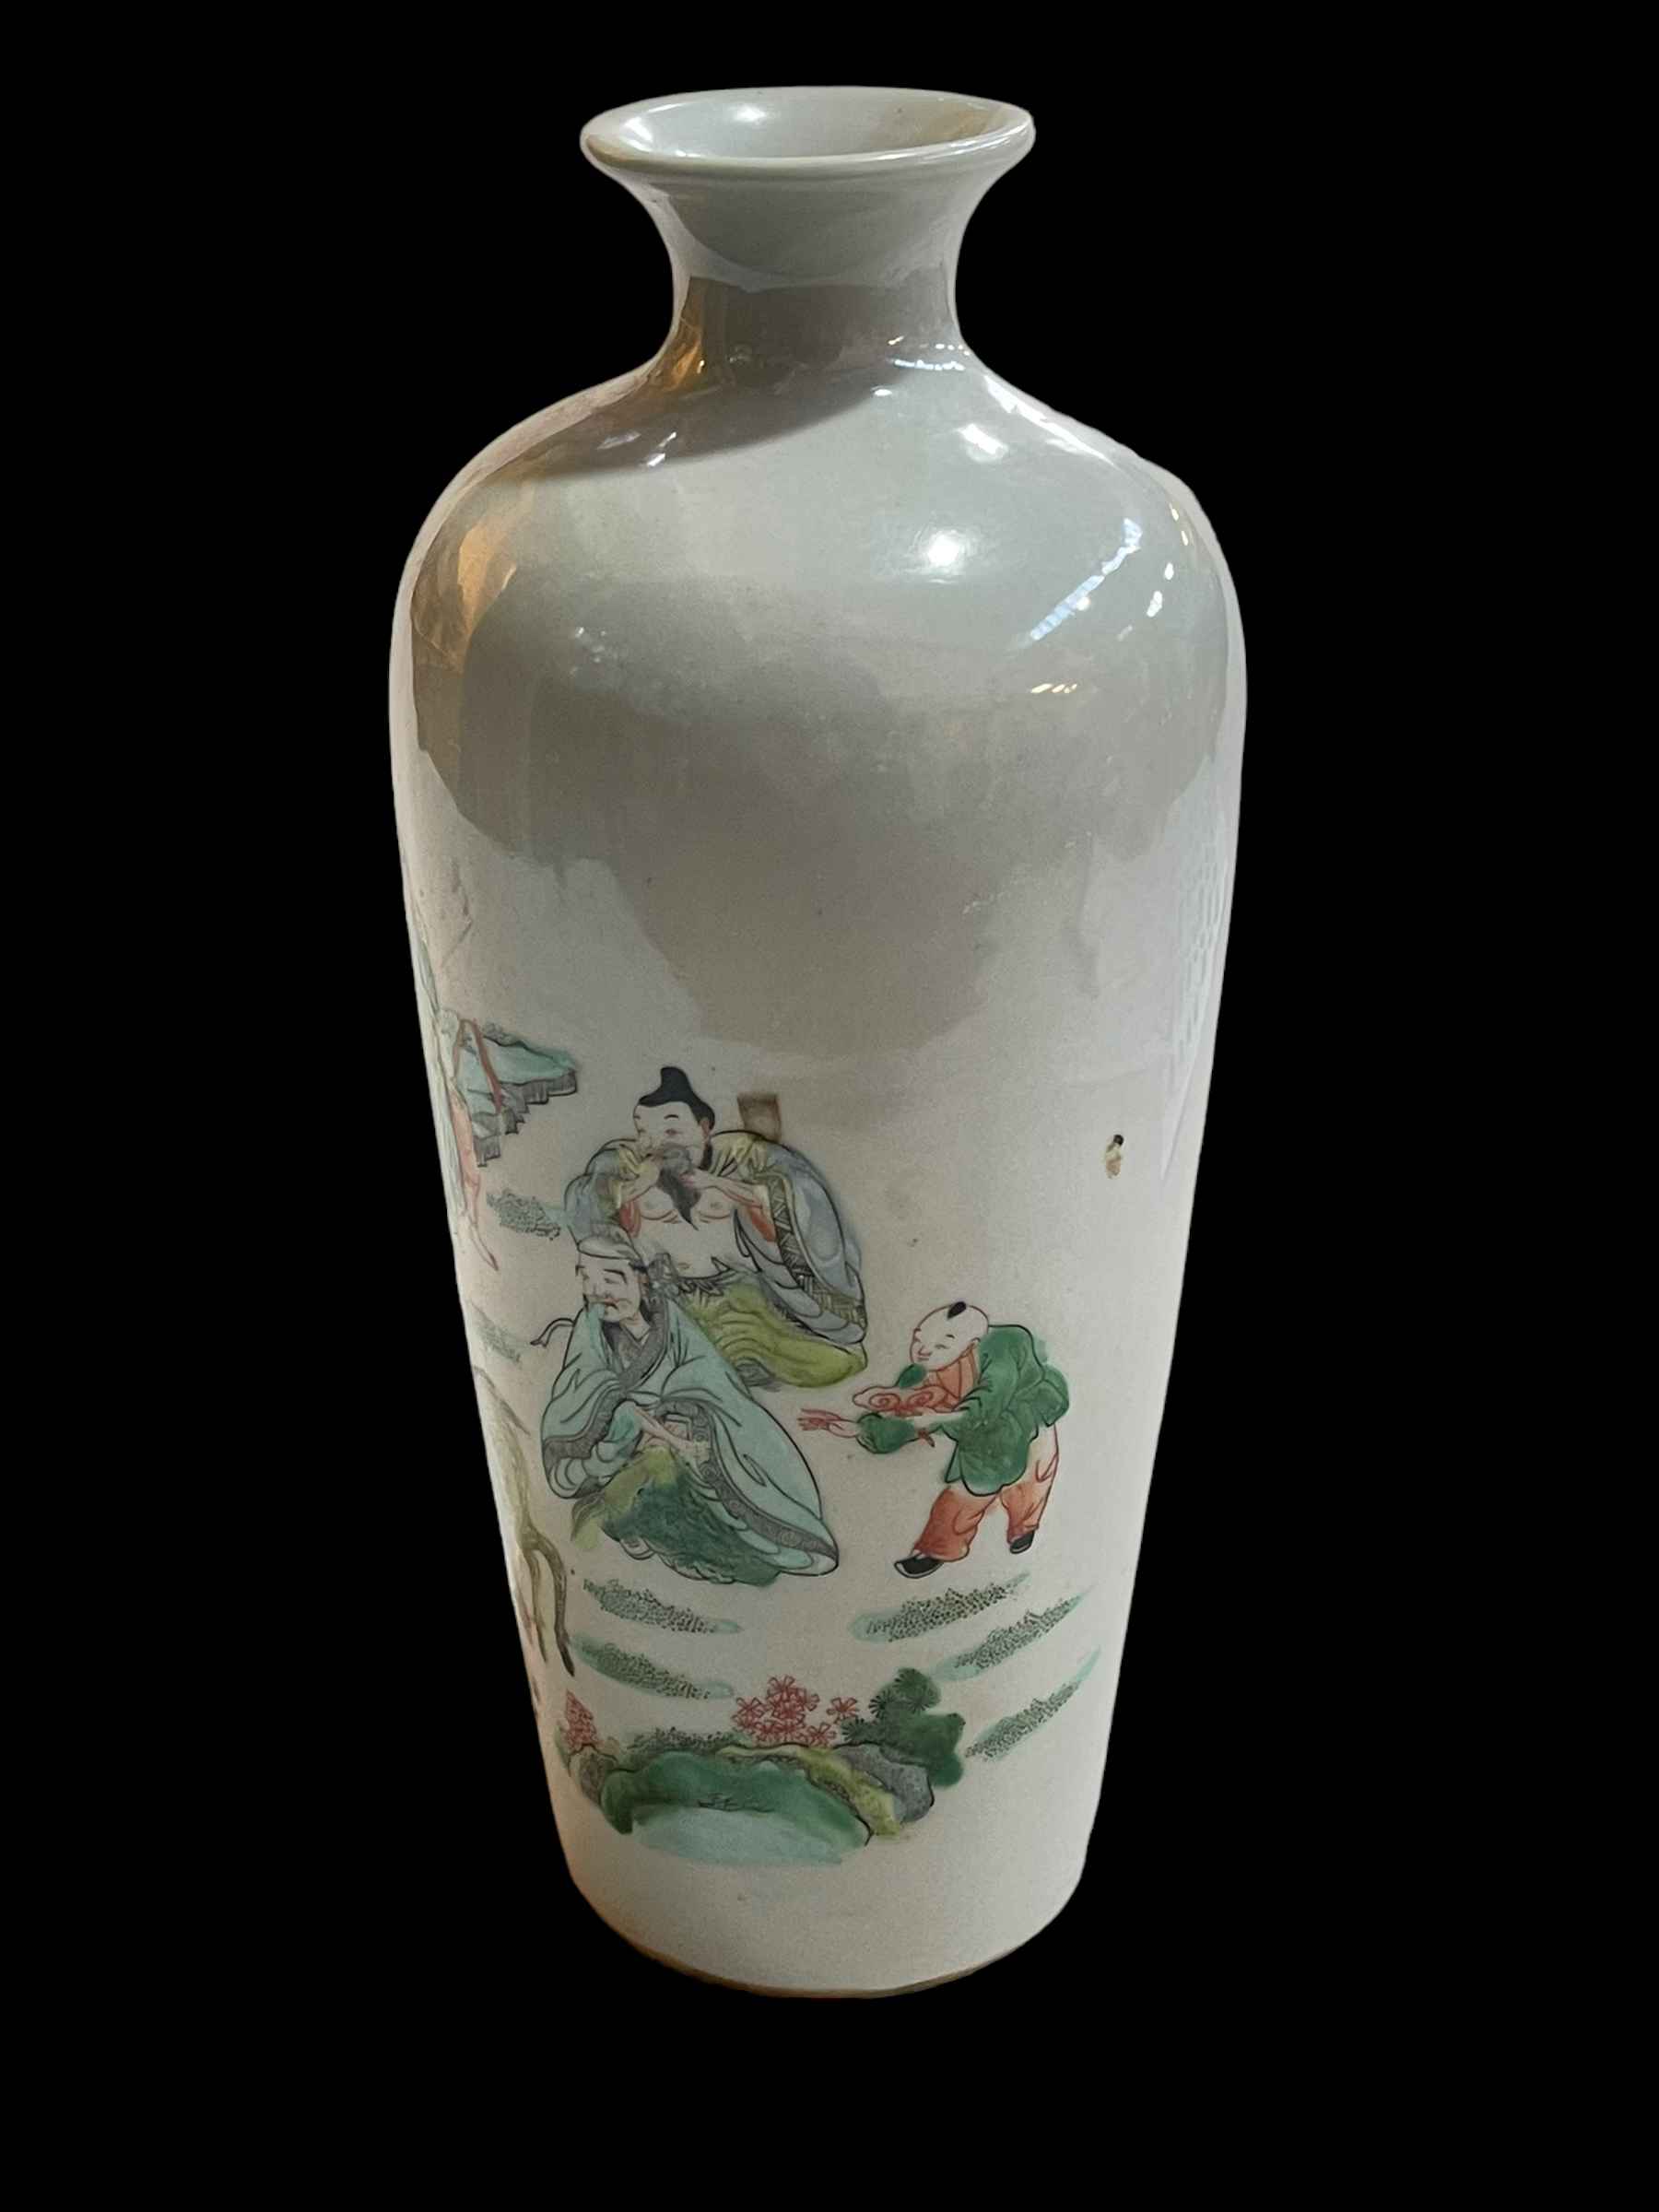 Chinese famille verte vase with decoration of figures, foo dog, deer and bat, 25cm. - Image 2 of 3